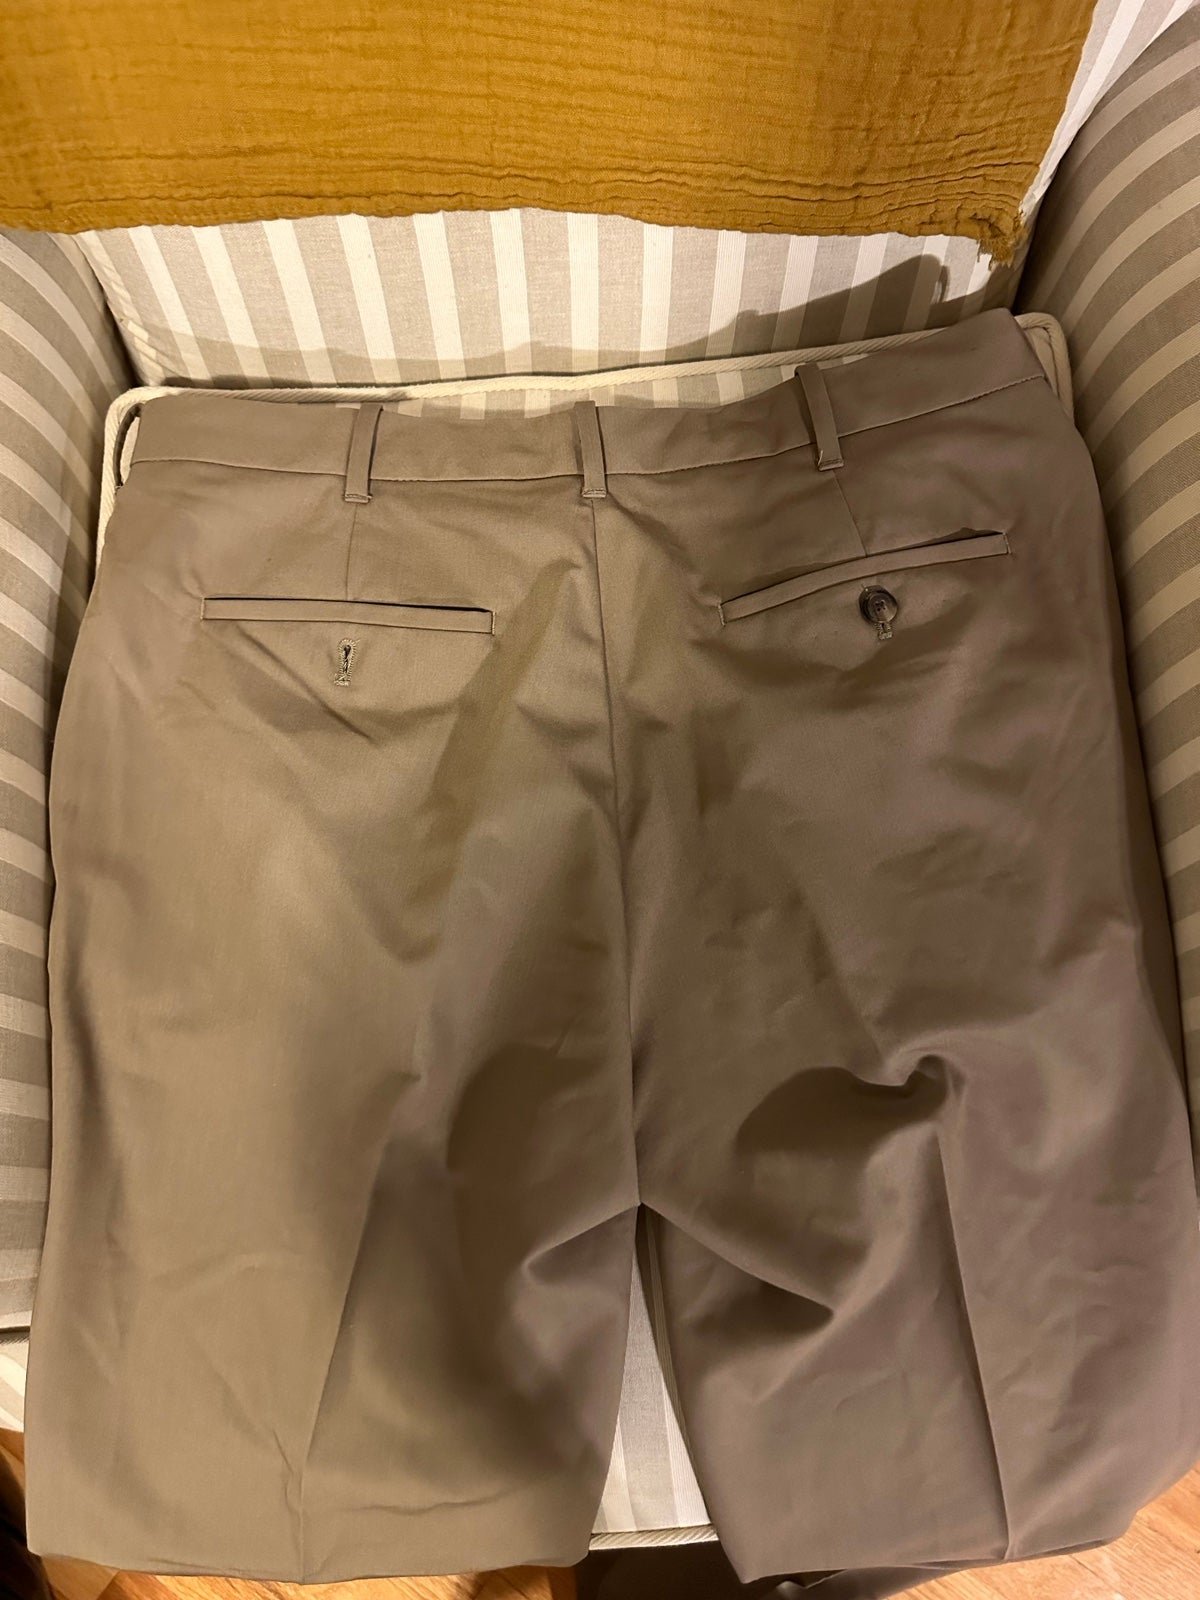 Cheap VAN HEUSEN Pants size 34x34 JFpTC3qYE on sale